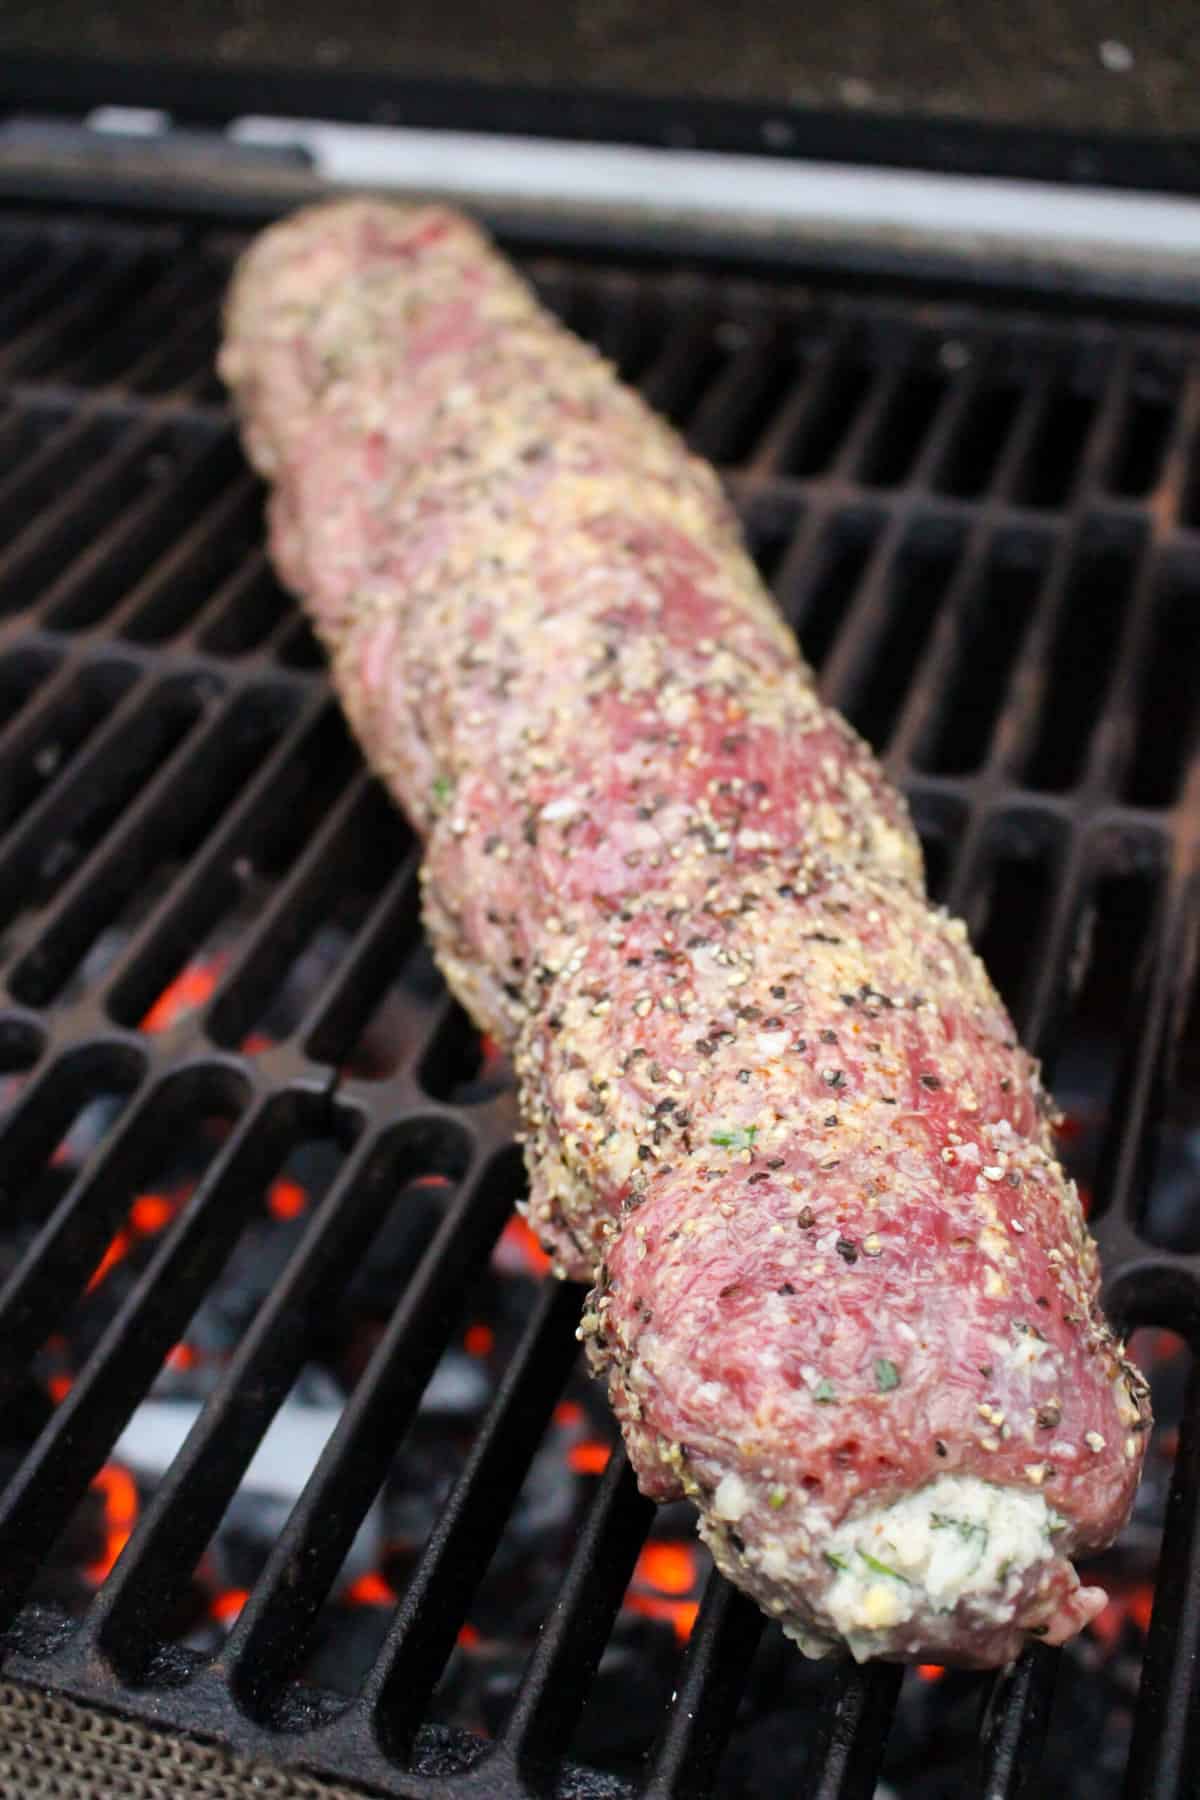 The seasoned, raw beef tenderloin hitting the grill.